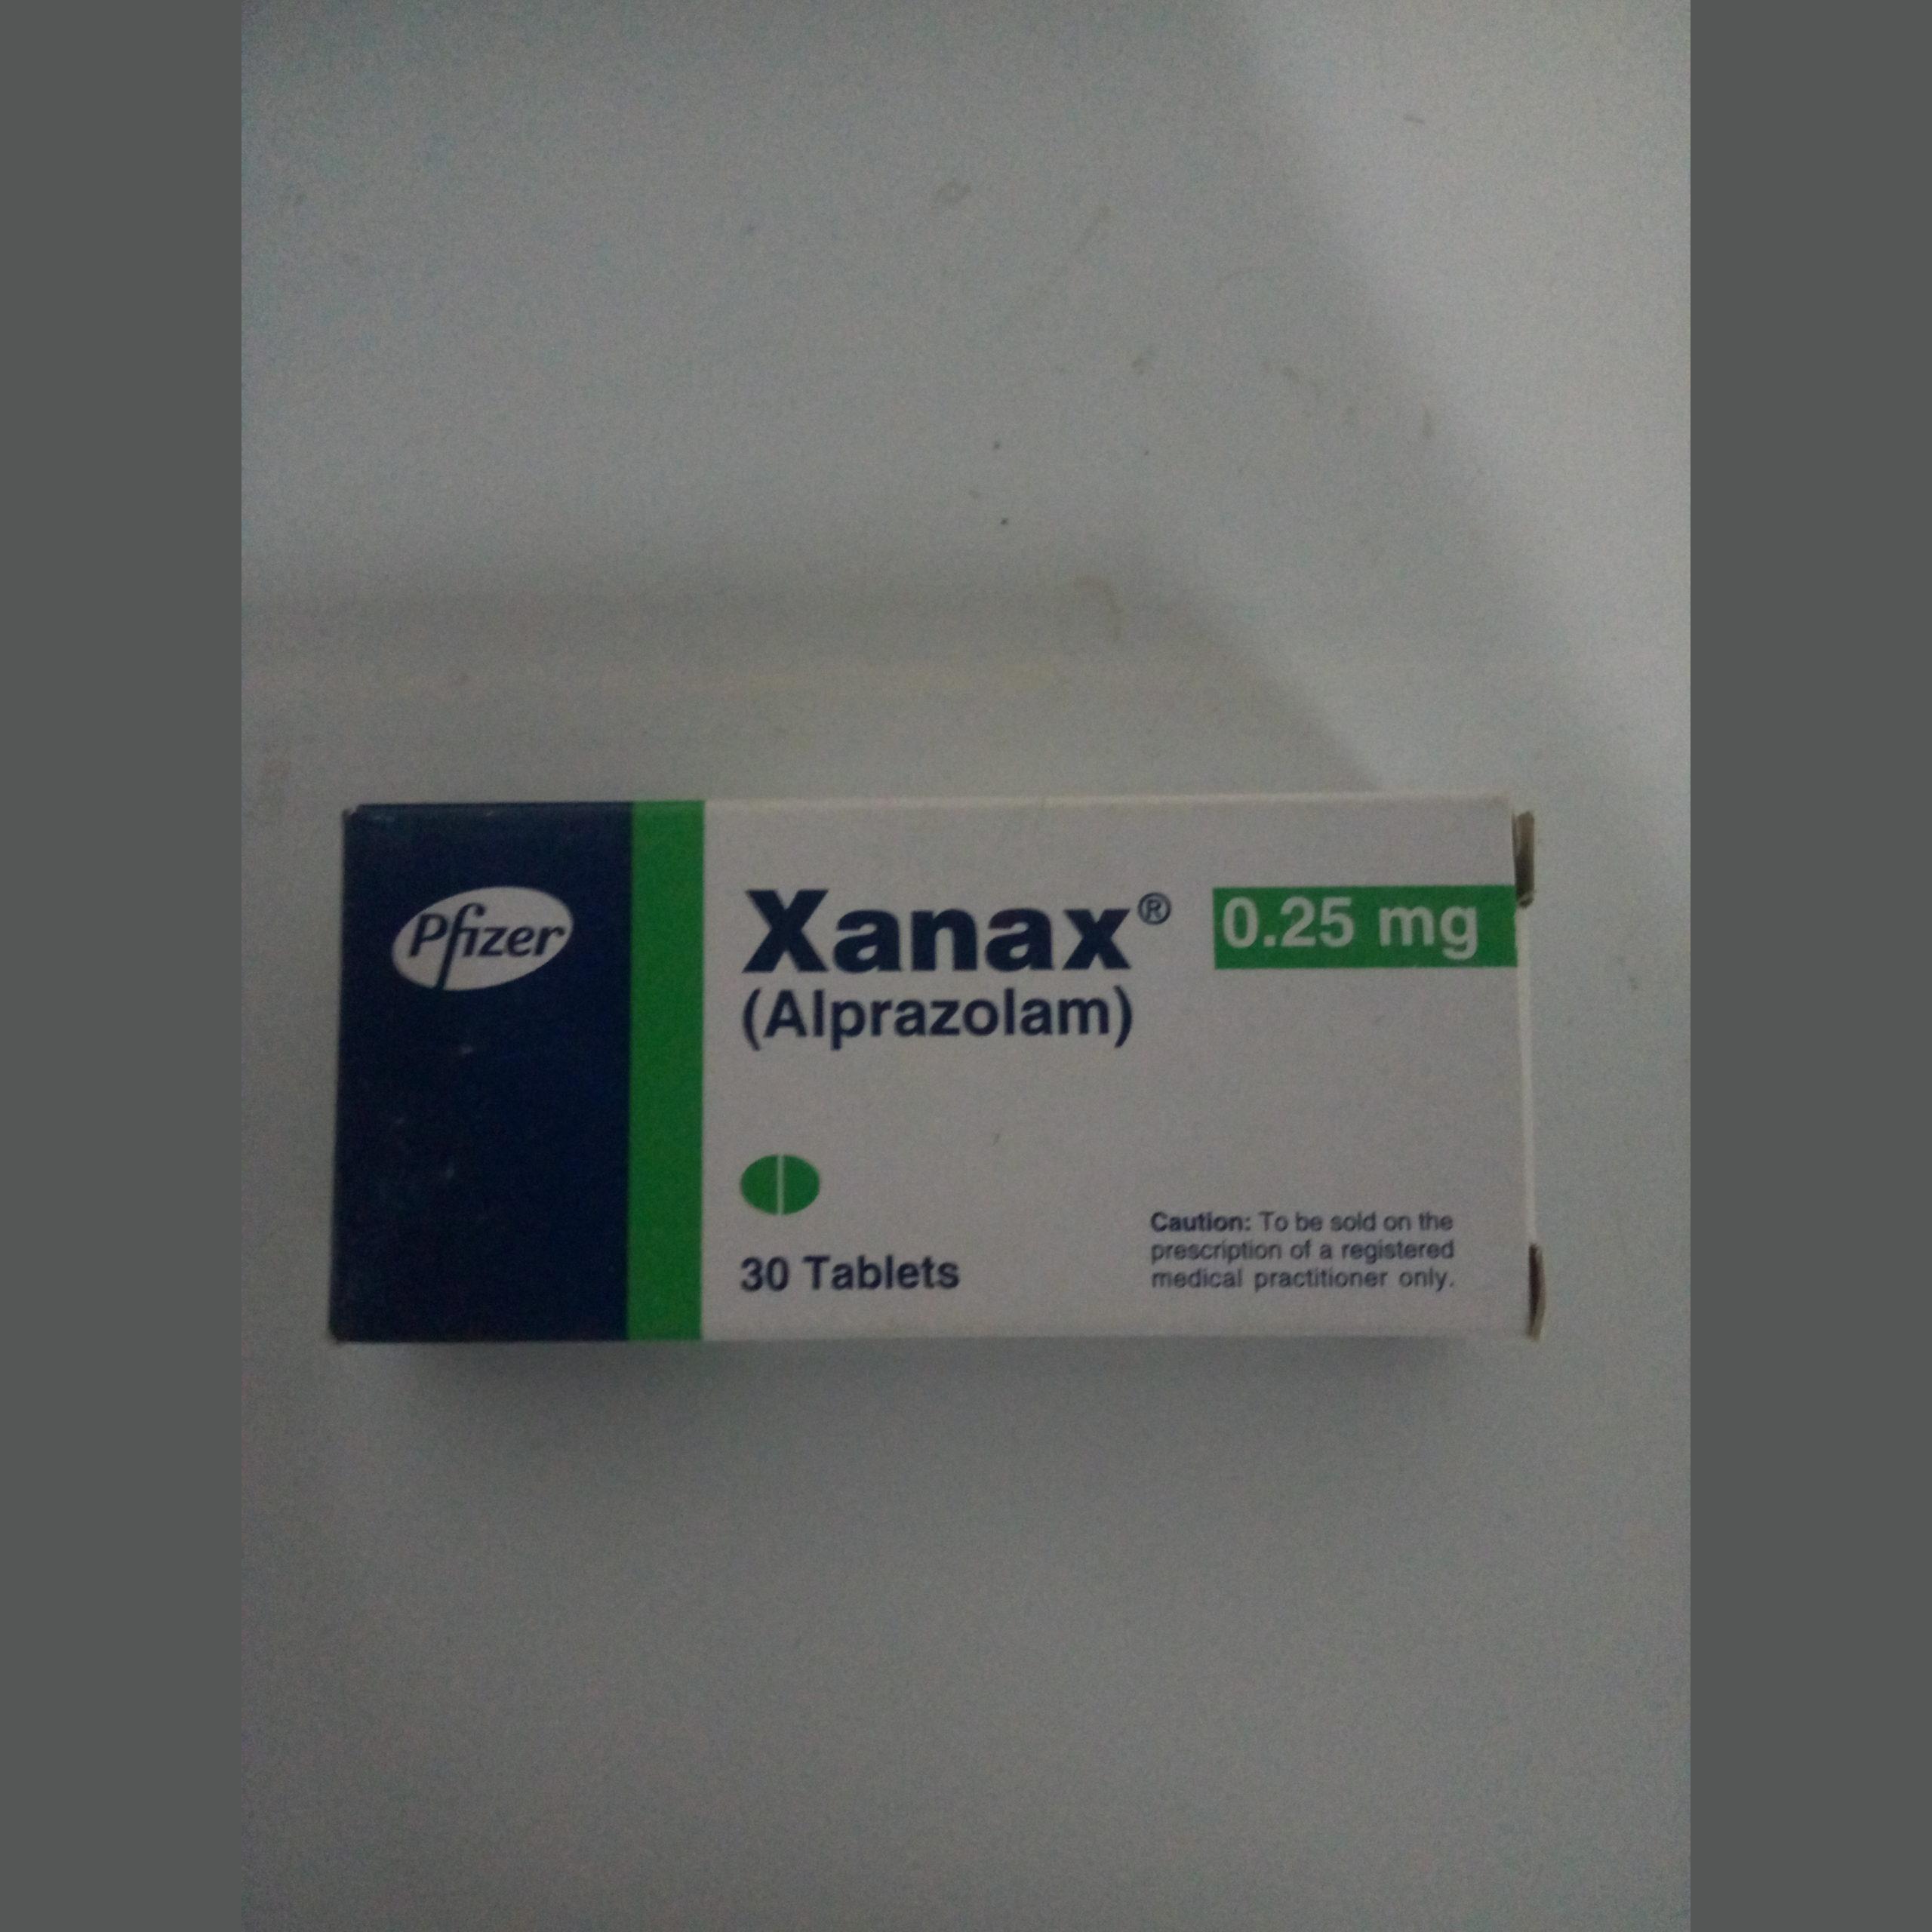 Ксанакс купить в аптеке. Алпразолам xanax. Ксанакс 0.5 мг алпразолам. Ксанакс 0.25 мг. Алпразолам 0.25.